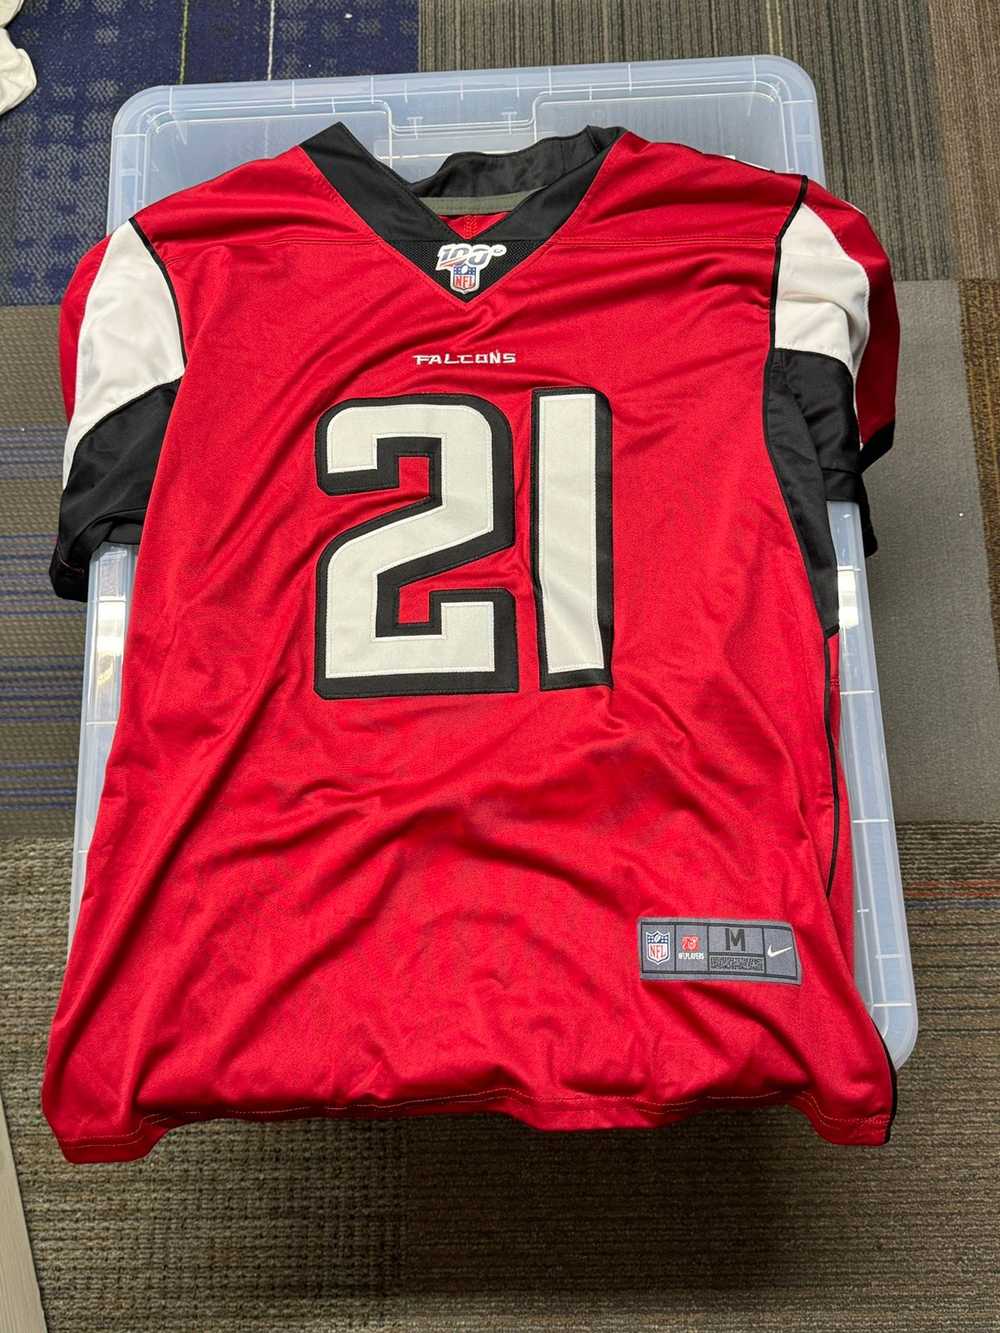 Nike Deion Primetime Sanders Falcons Jersey - image 1